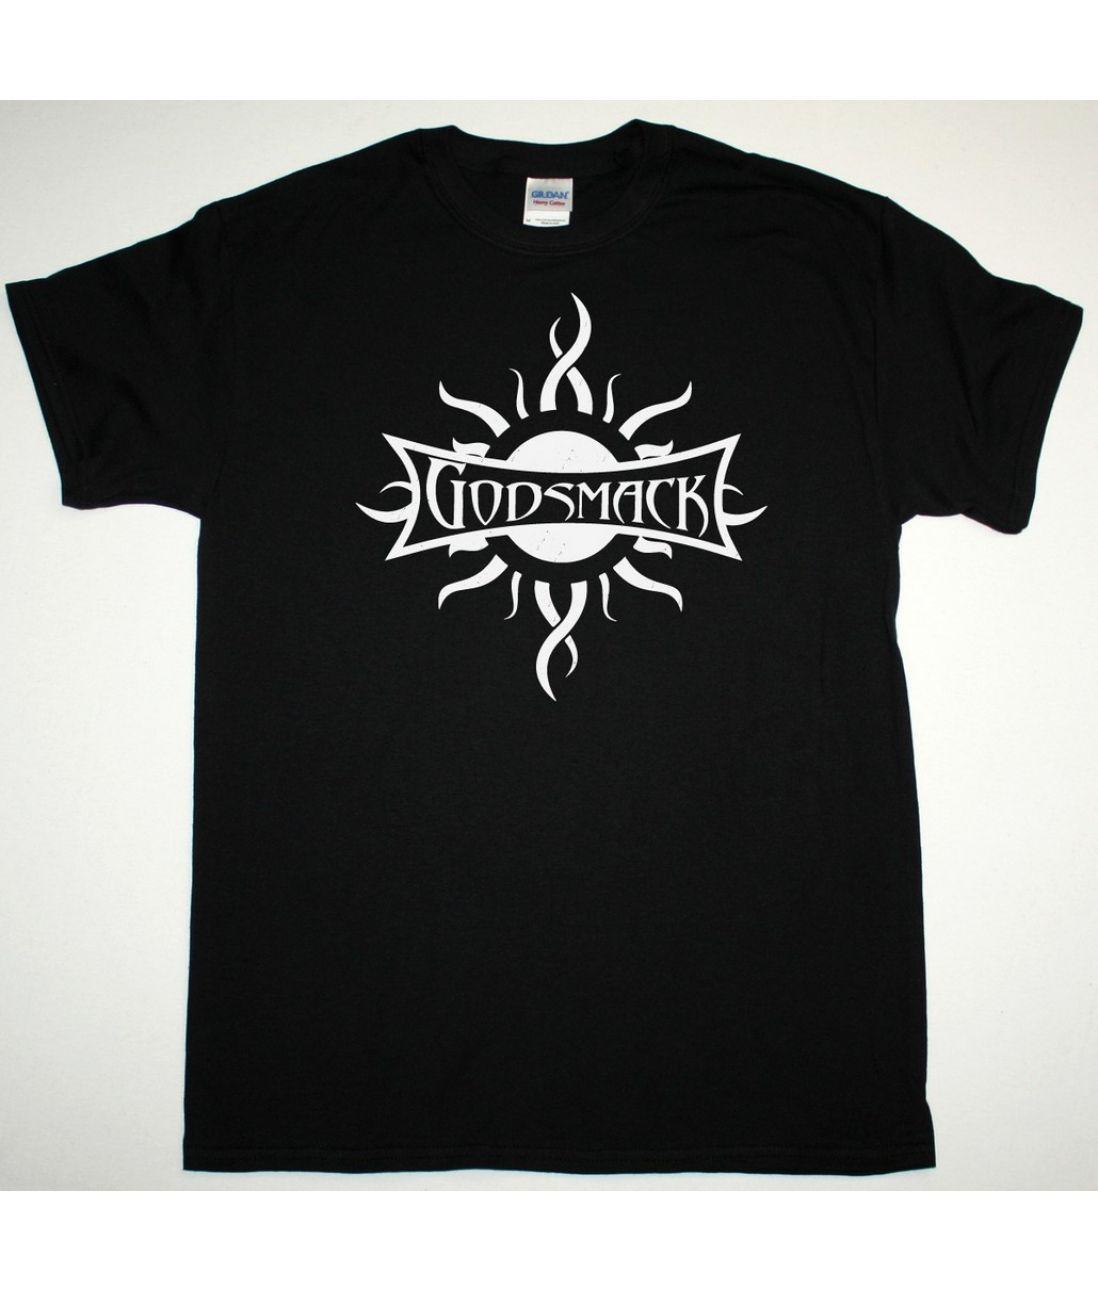 Godsmack Logo - GODSMACK LOGO NEW BLACK T SHIRT - Best Rock T-shirts